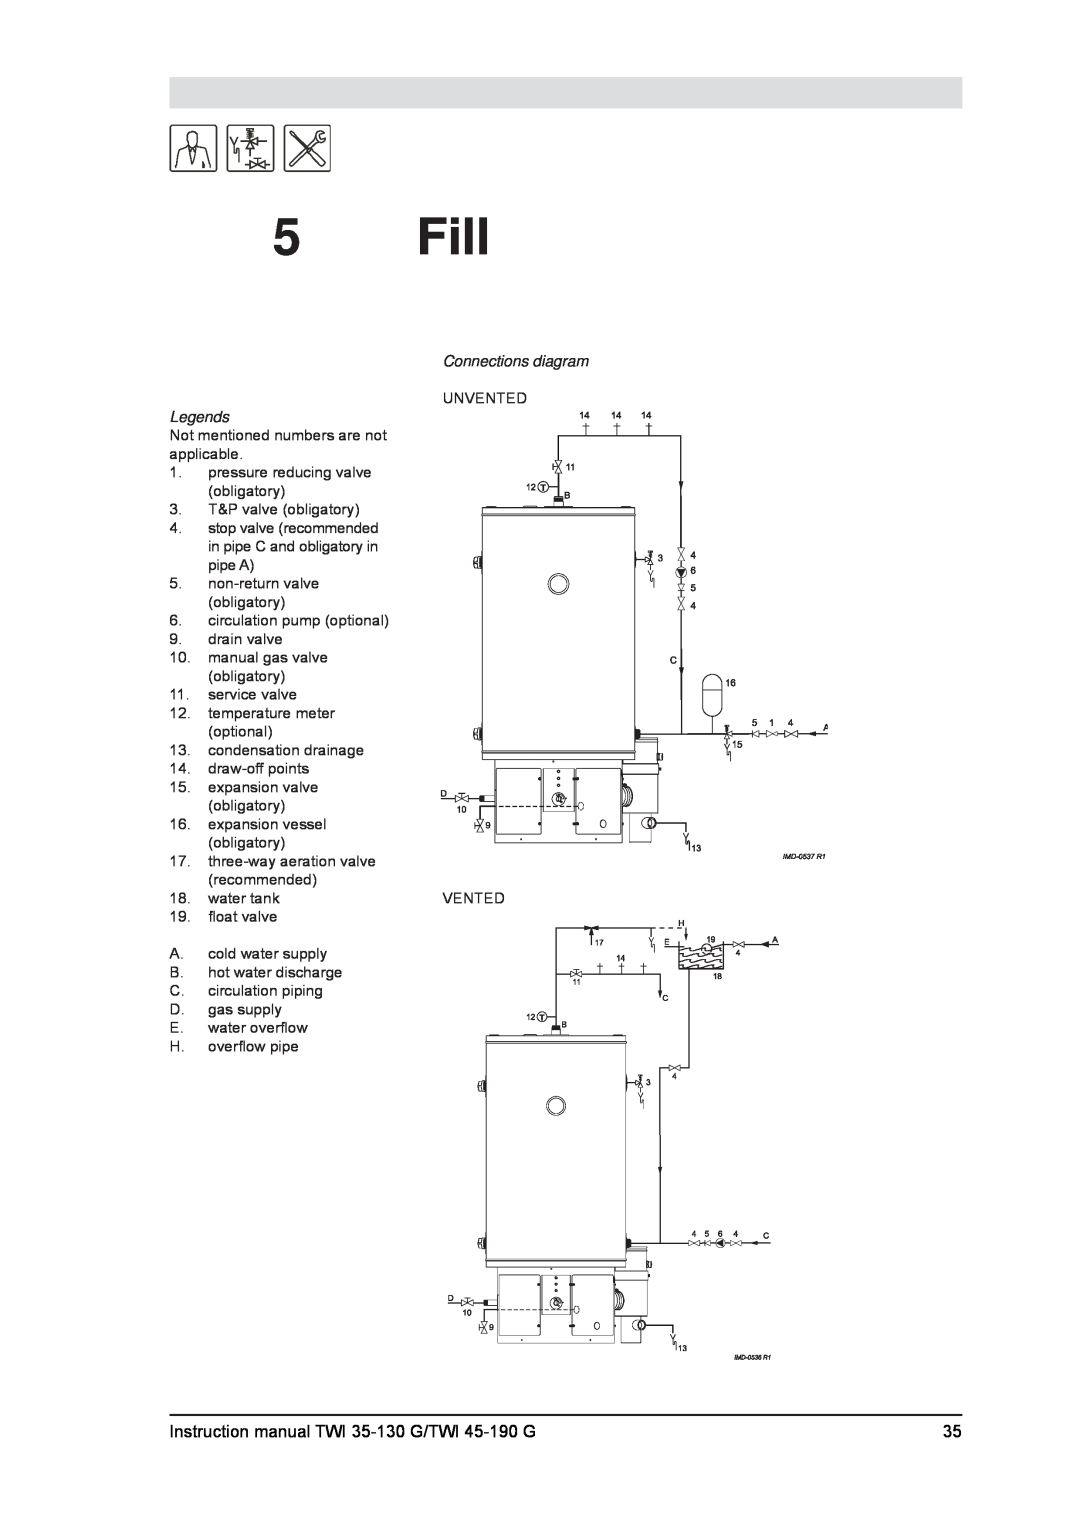 A.O. Smith service manual Fill, Instruction manual TWI 35-130 G/TWI 45-190 G 